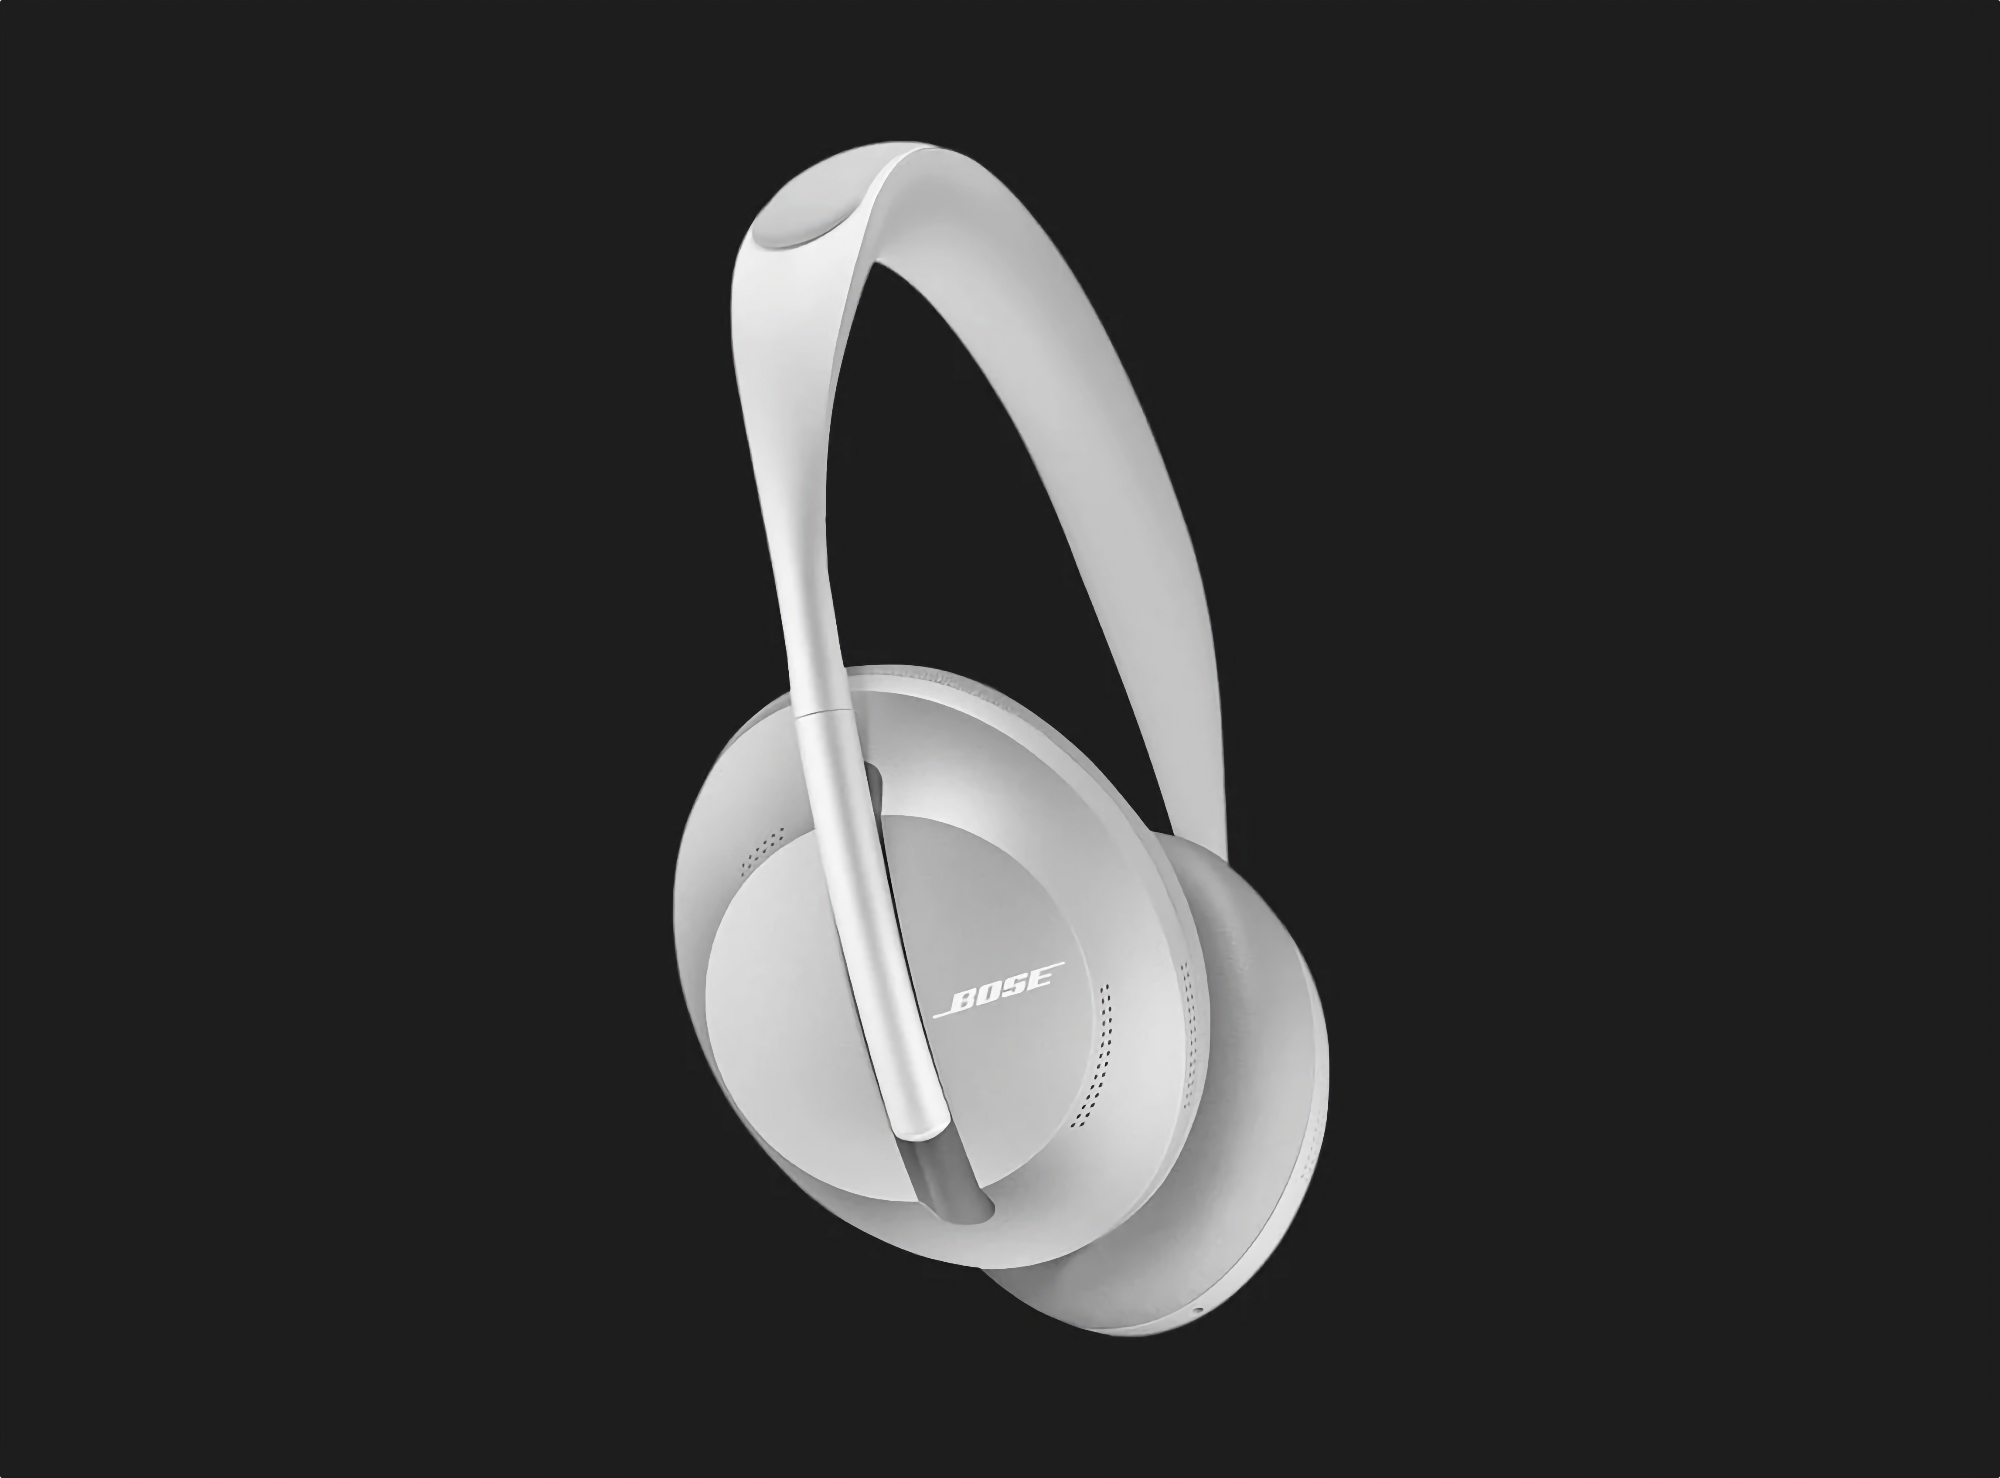 50$ de descuento: Auriculares Bose Noise Cancelling 700 con ANC disponibles en Amazon a precio promocional.